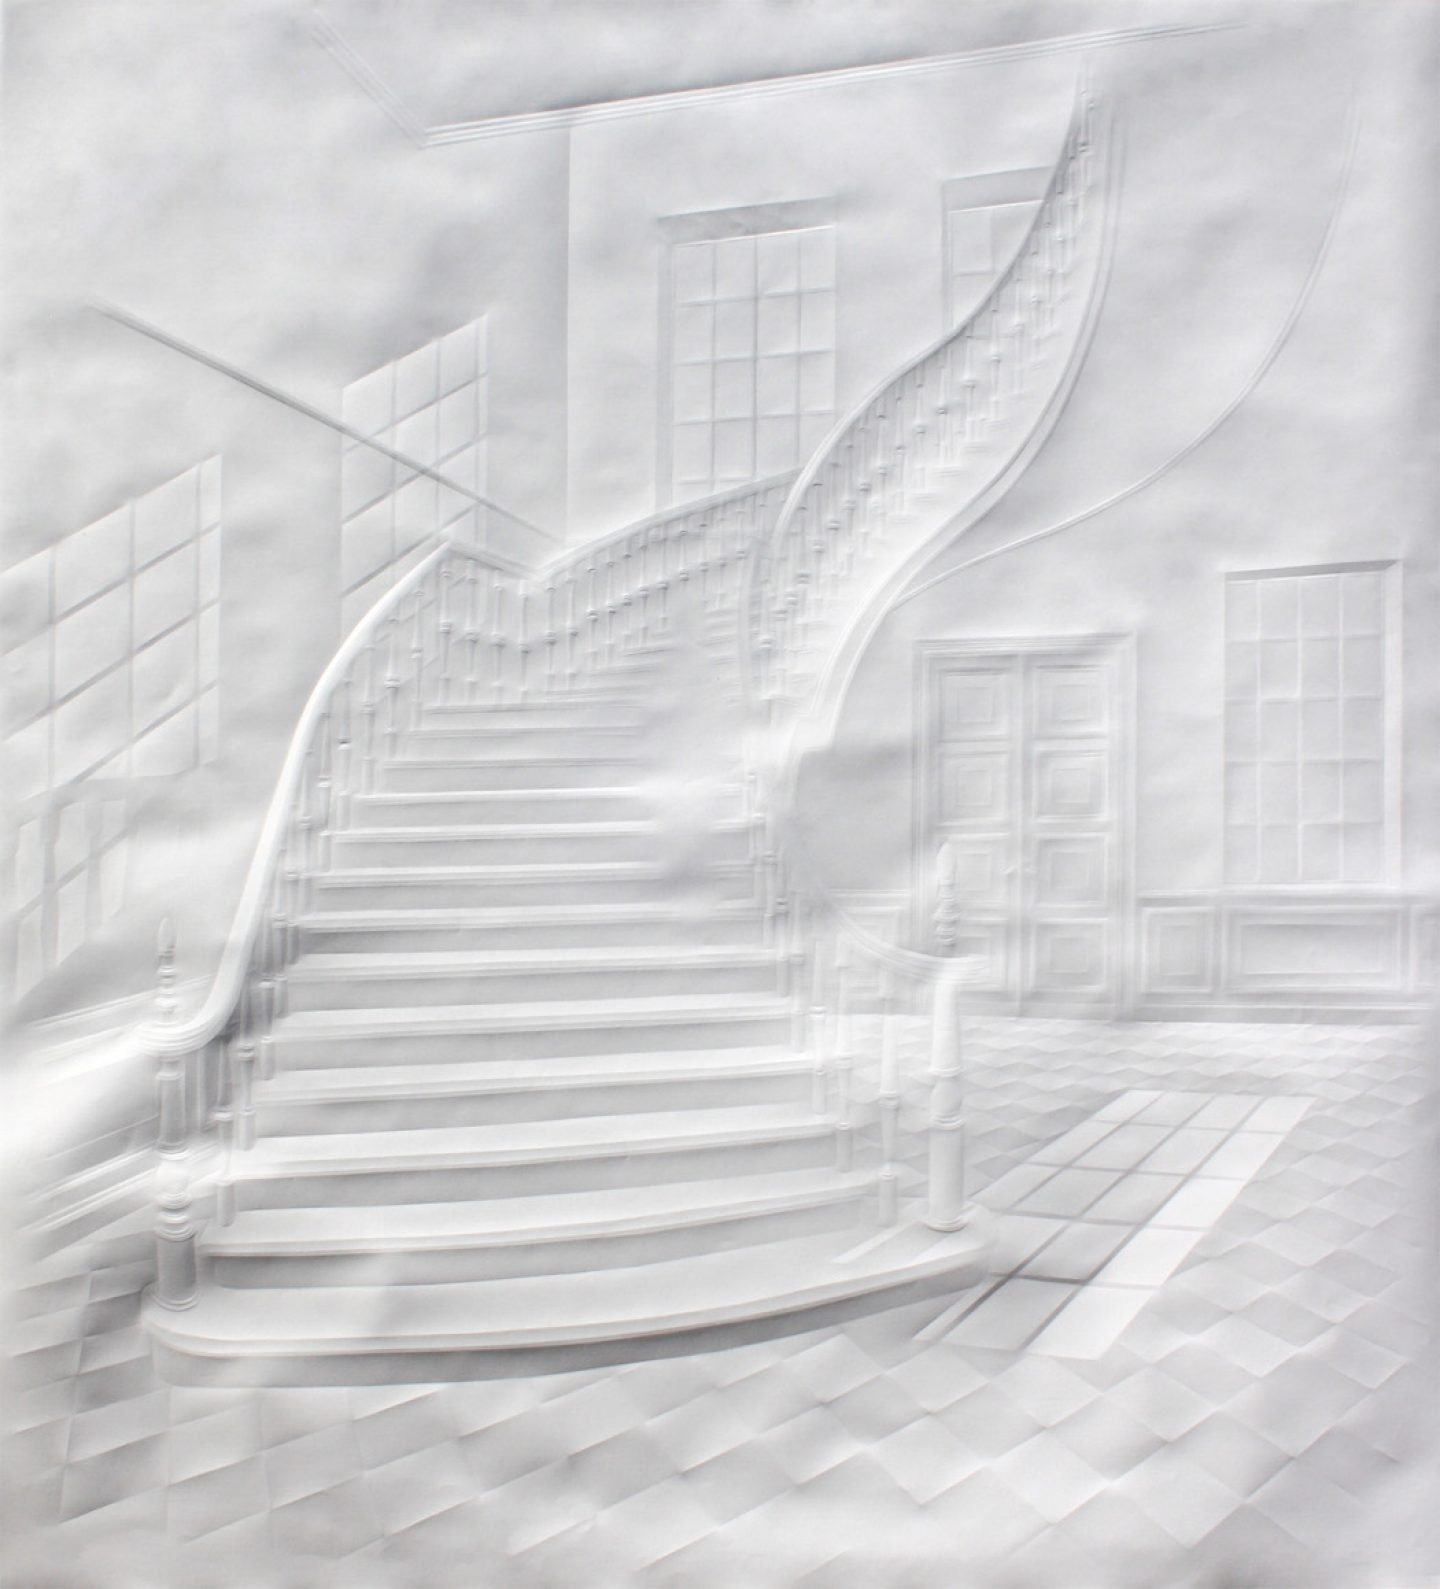 simonschubert(large stairway), 2015, 120cm x 110cm